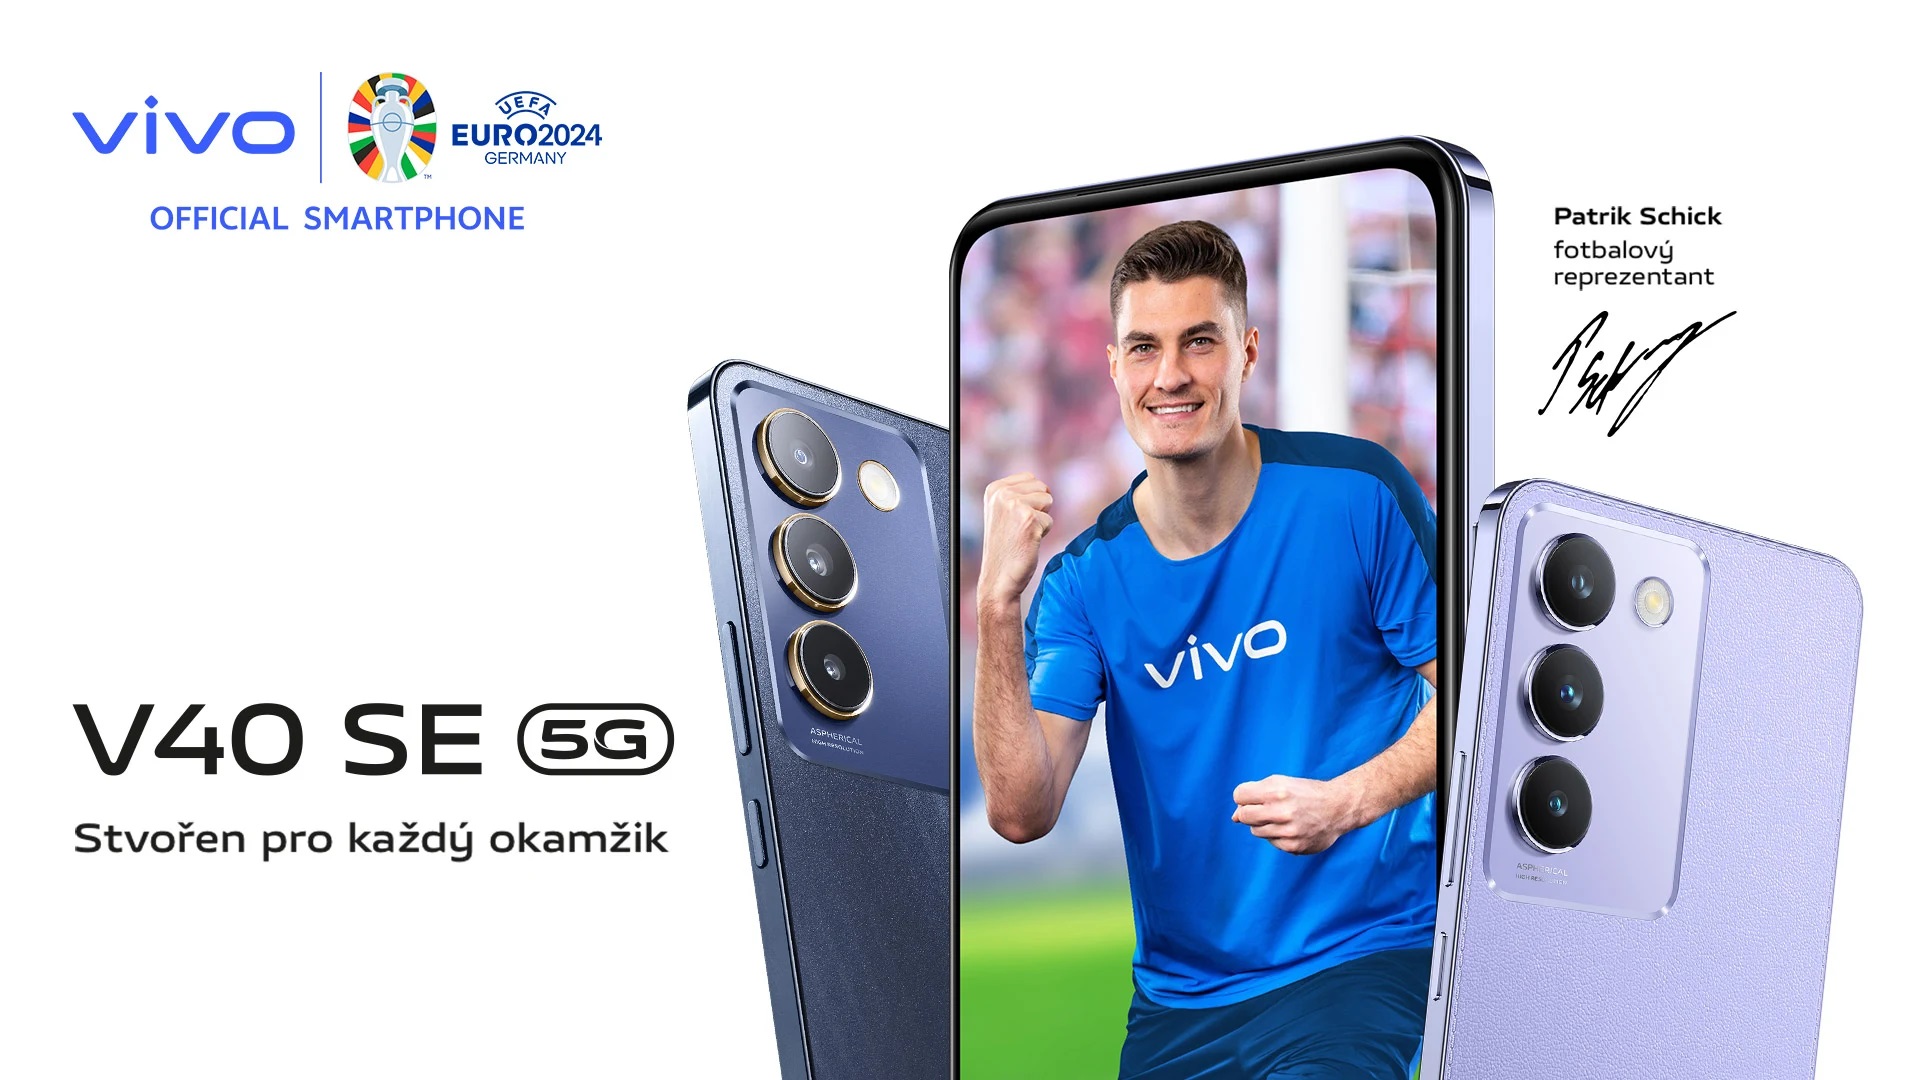 smartfon Vivo V40 SE 5G UEFA Euro 2024 smartphone